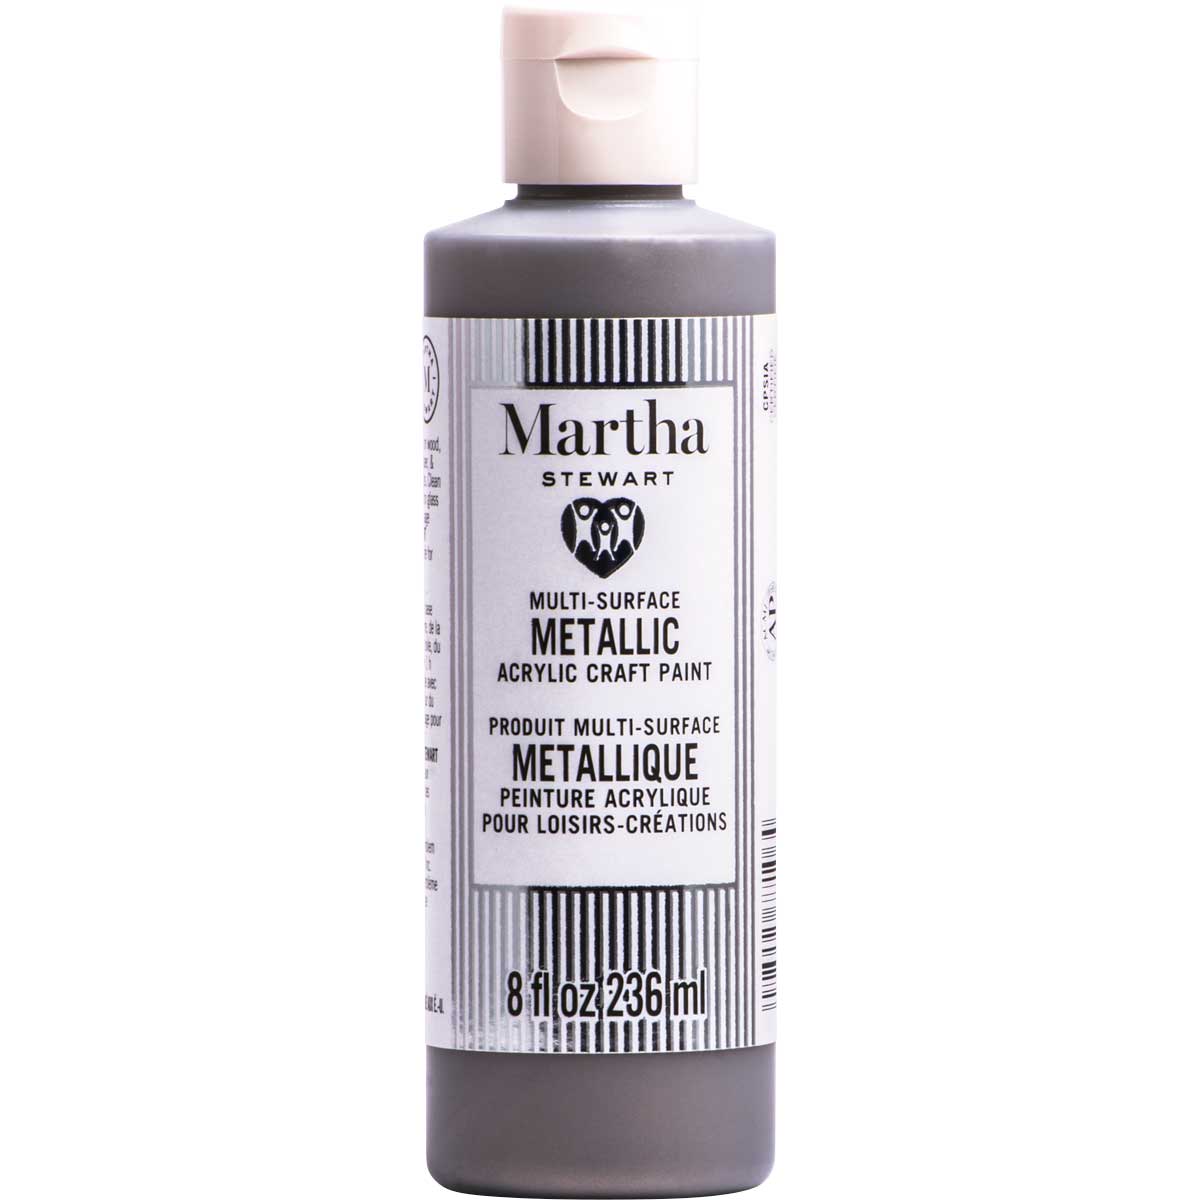 Martha Stewart ® Multi-Surface Metallic Acrylic Craft Paint CPSIA - Royal Silver, 8 oz. - 77106